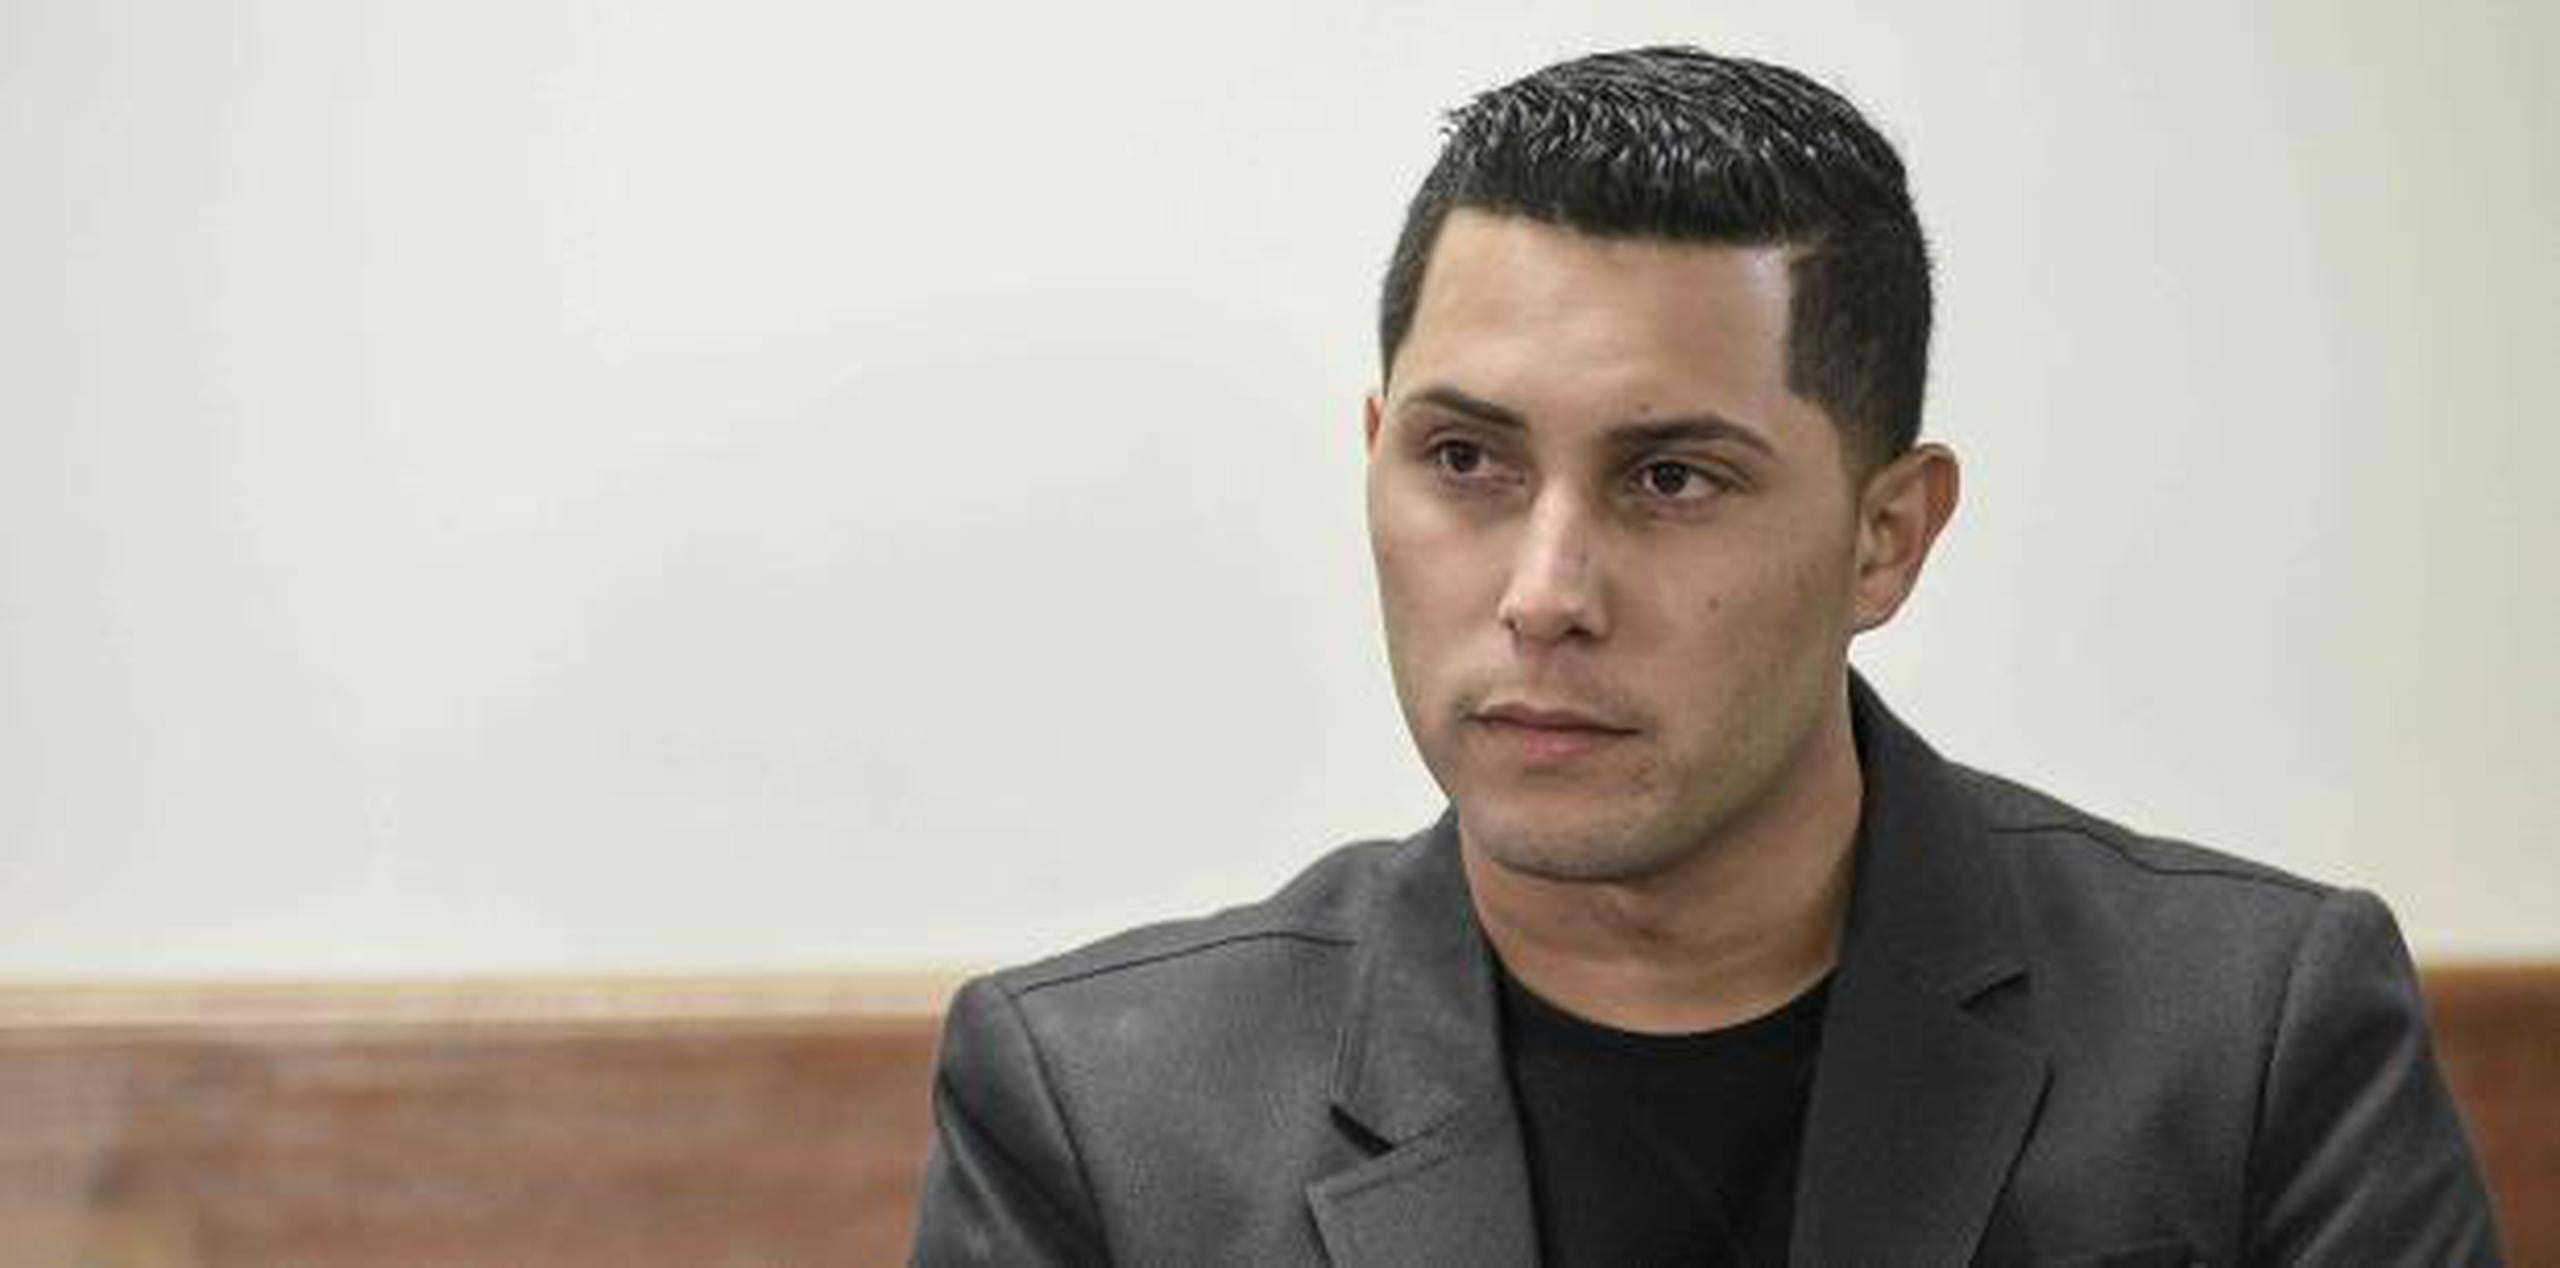 Jensen Medina Cardona quedó en libertad bajo fianza luego de ser acusado ayer. (gerald.lopez@gfrmedia.com)